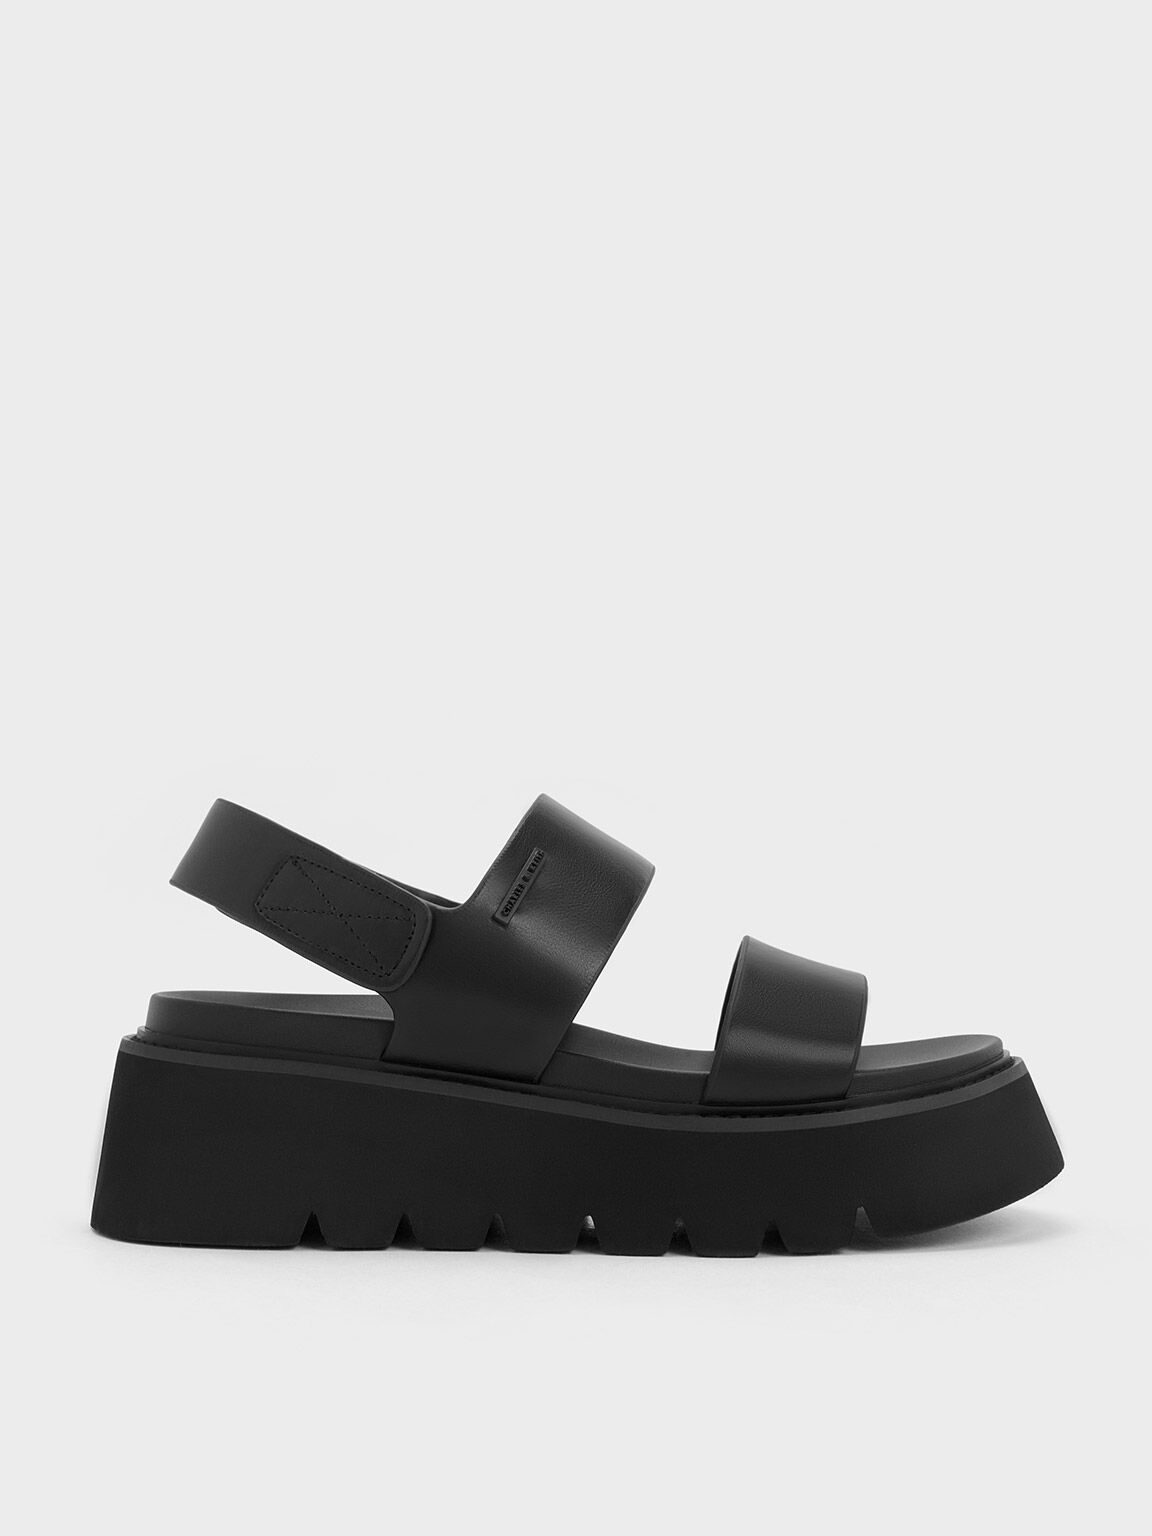 High Heel Chunky Platform Heel Sandals (Black/White) – The Kawaii Factory